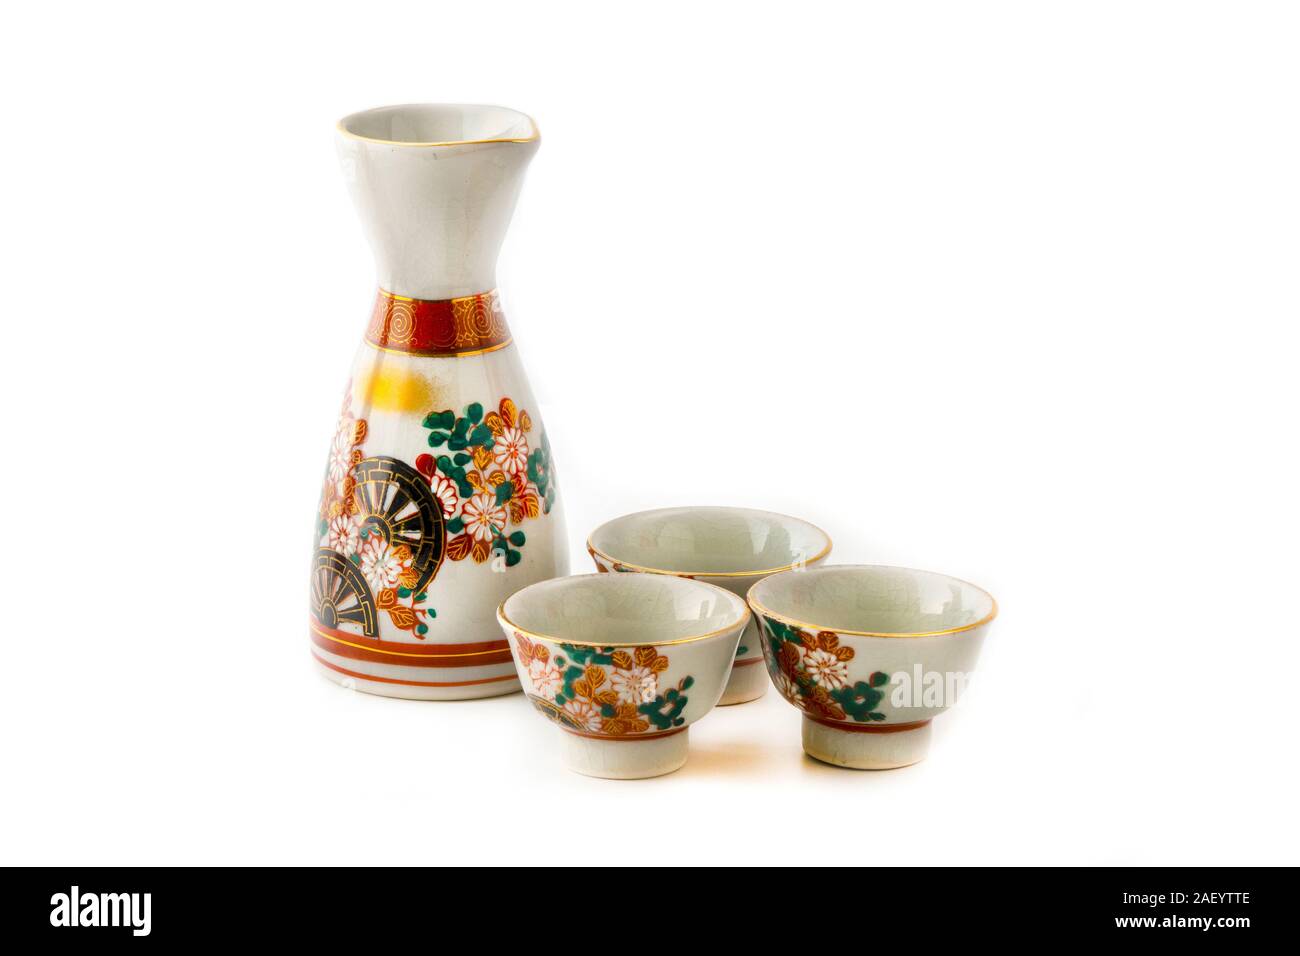 Sake serving set on a white background Stock Photo